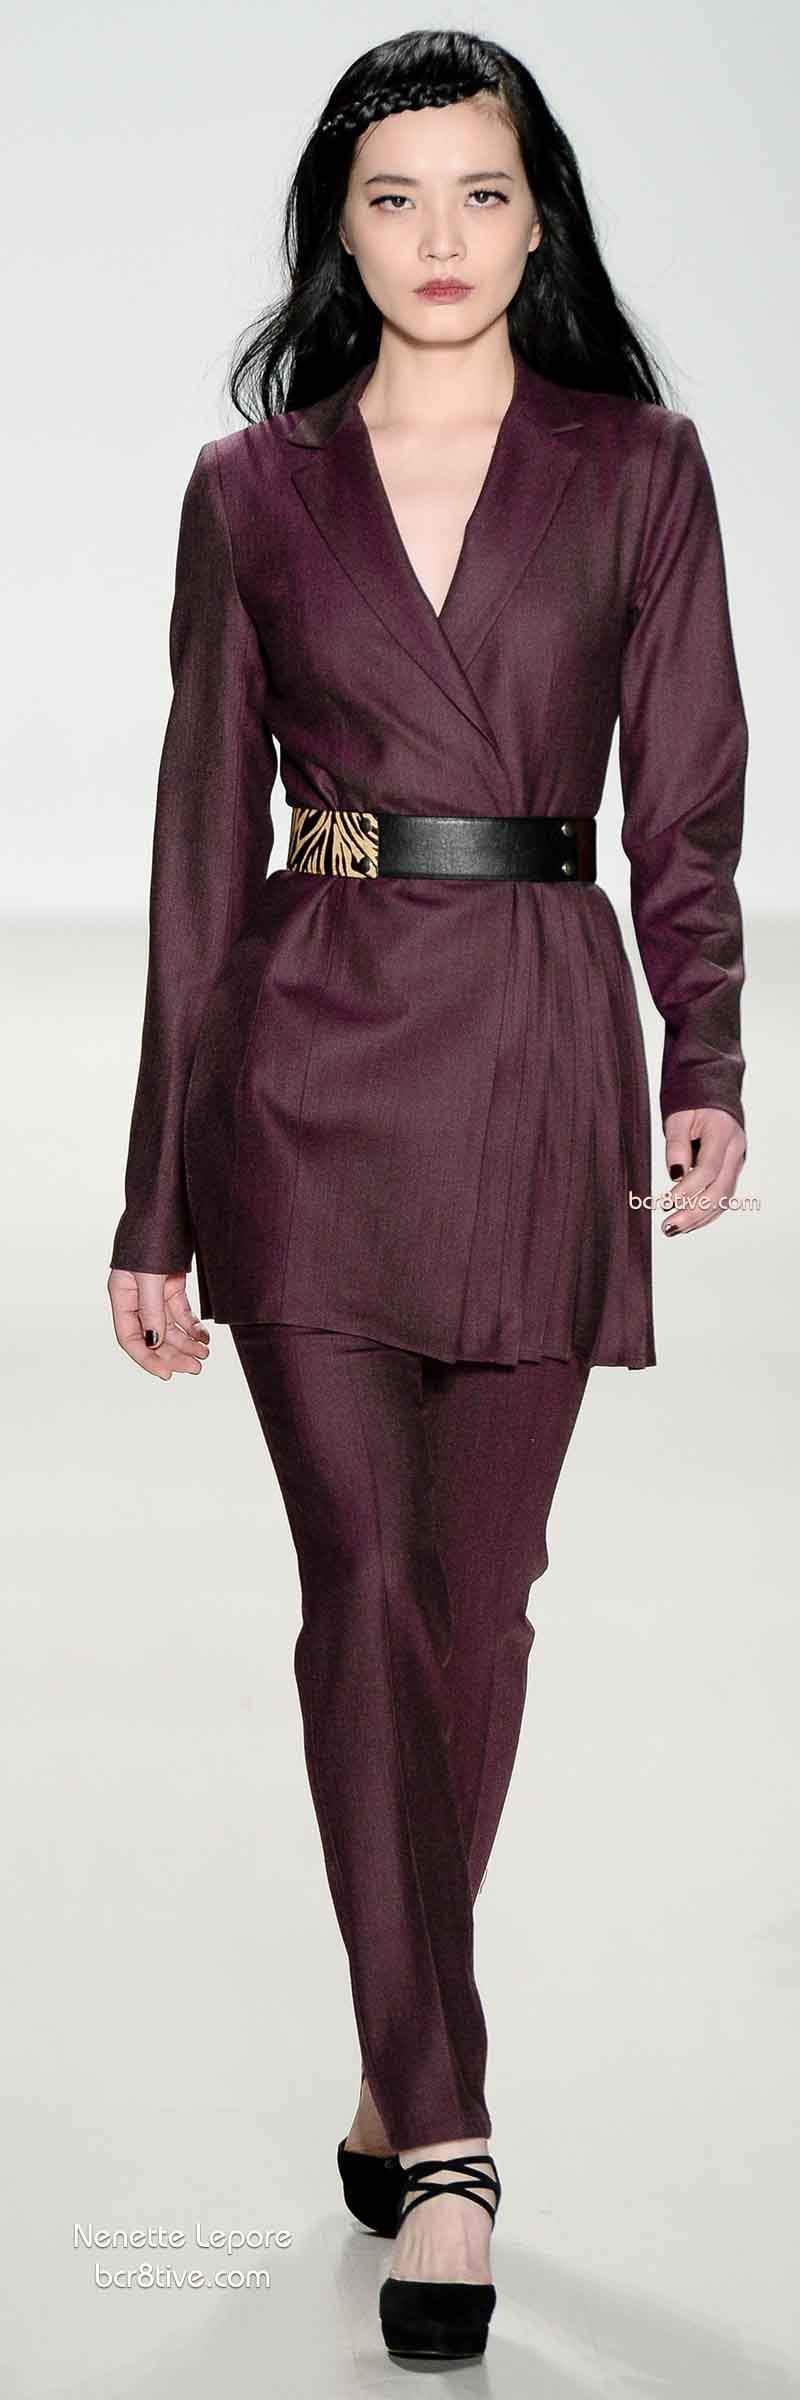 Fall 2014 Menswear Inspired Fashion - Nenette Lepore